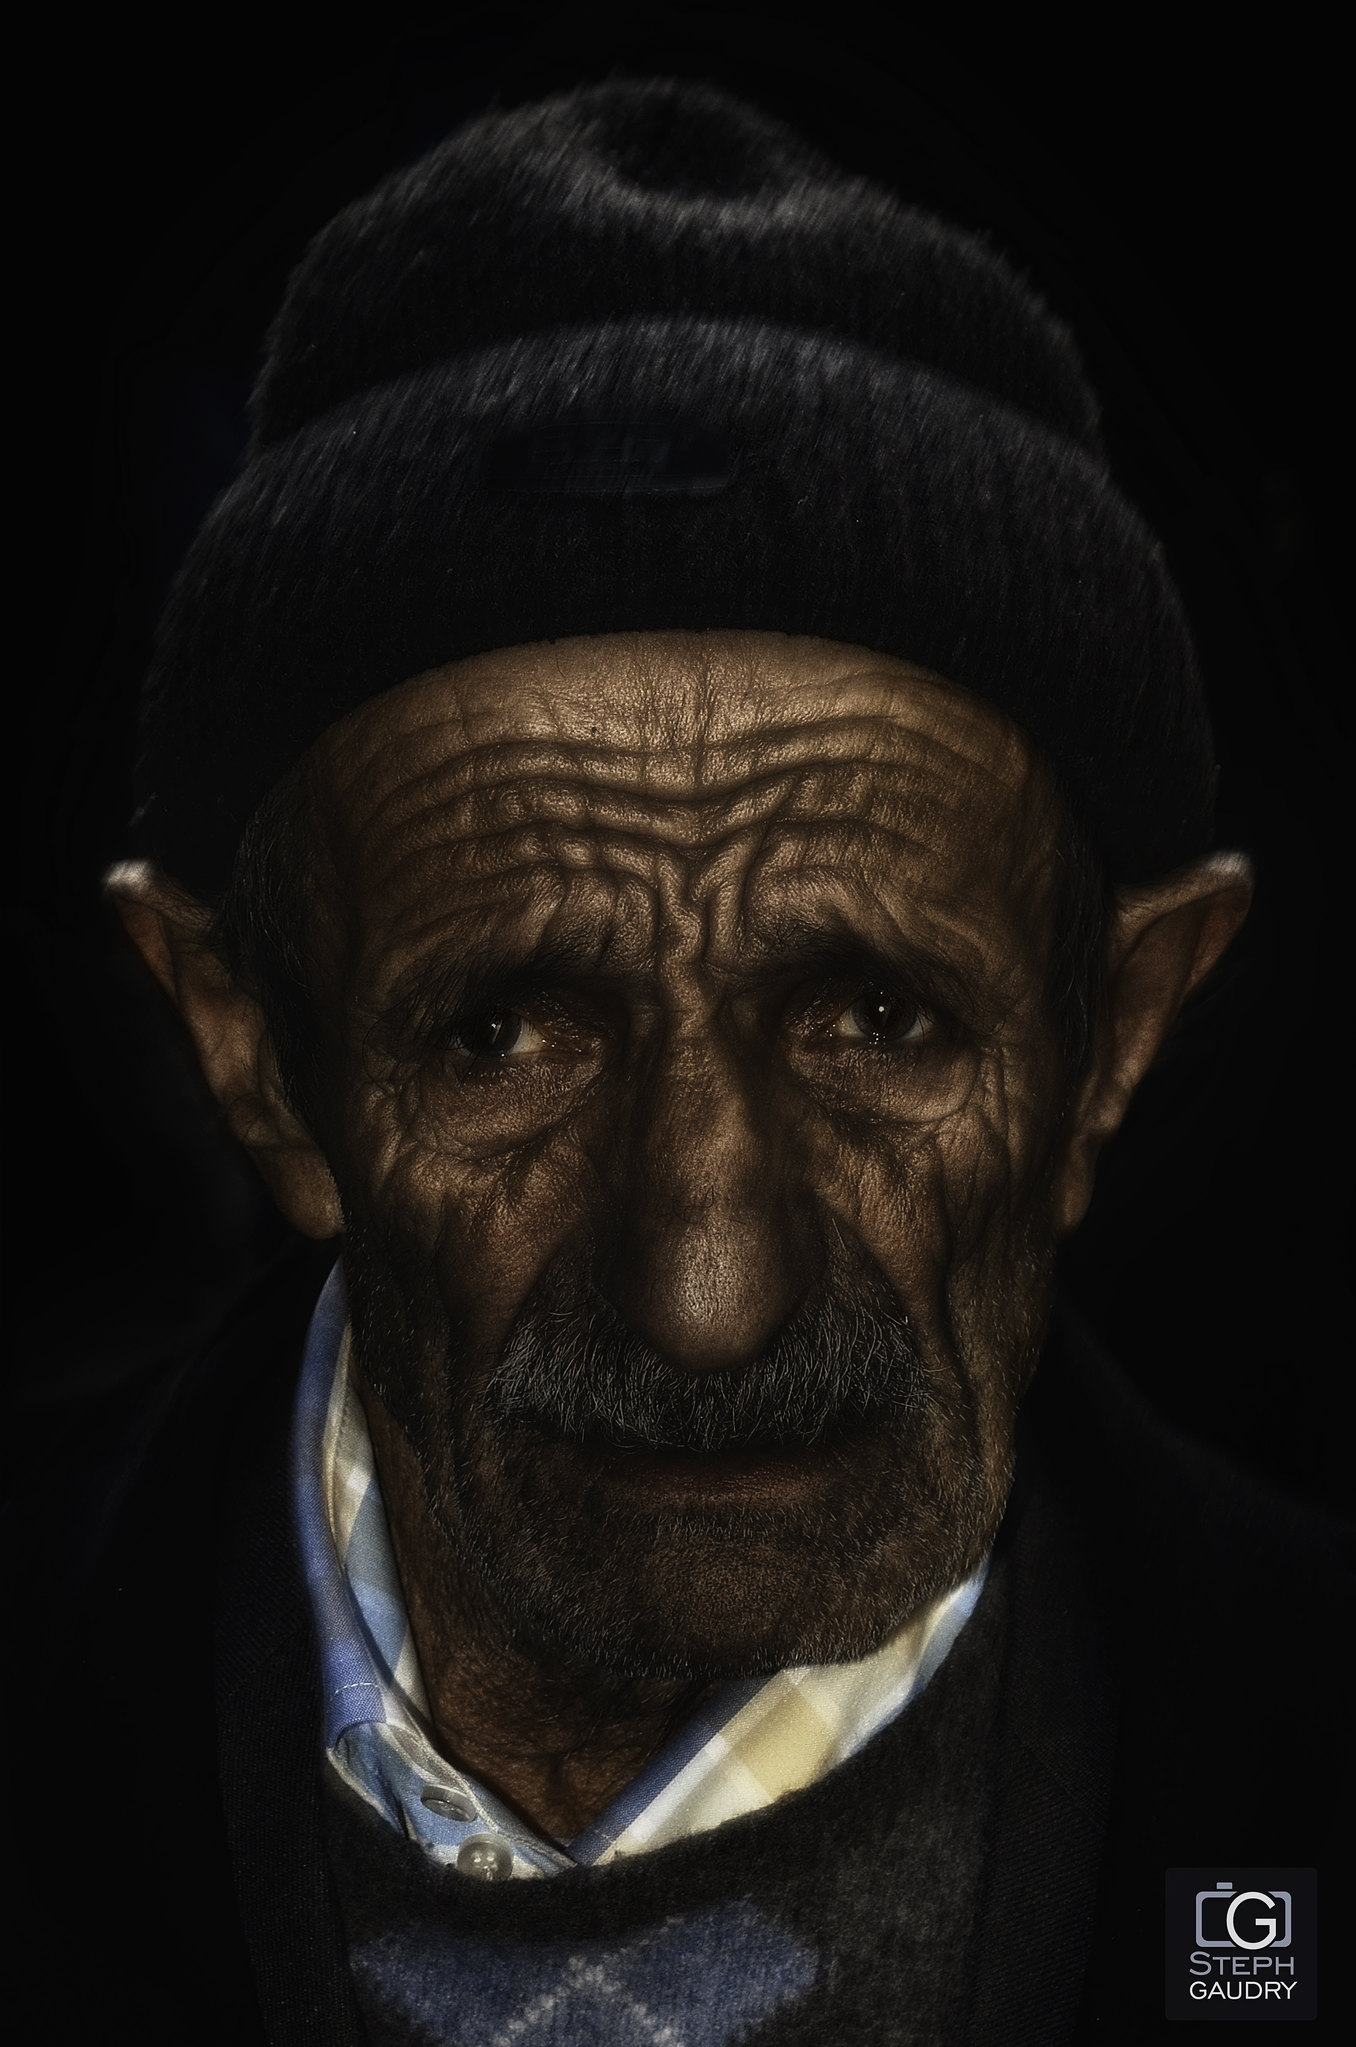 Istanbul, Portrait 201202-4 [Click to start slideshow]